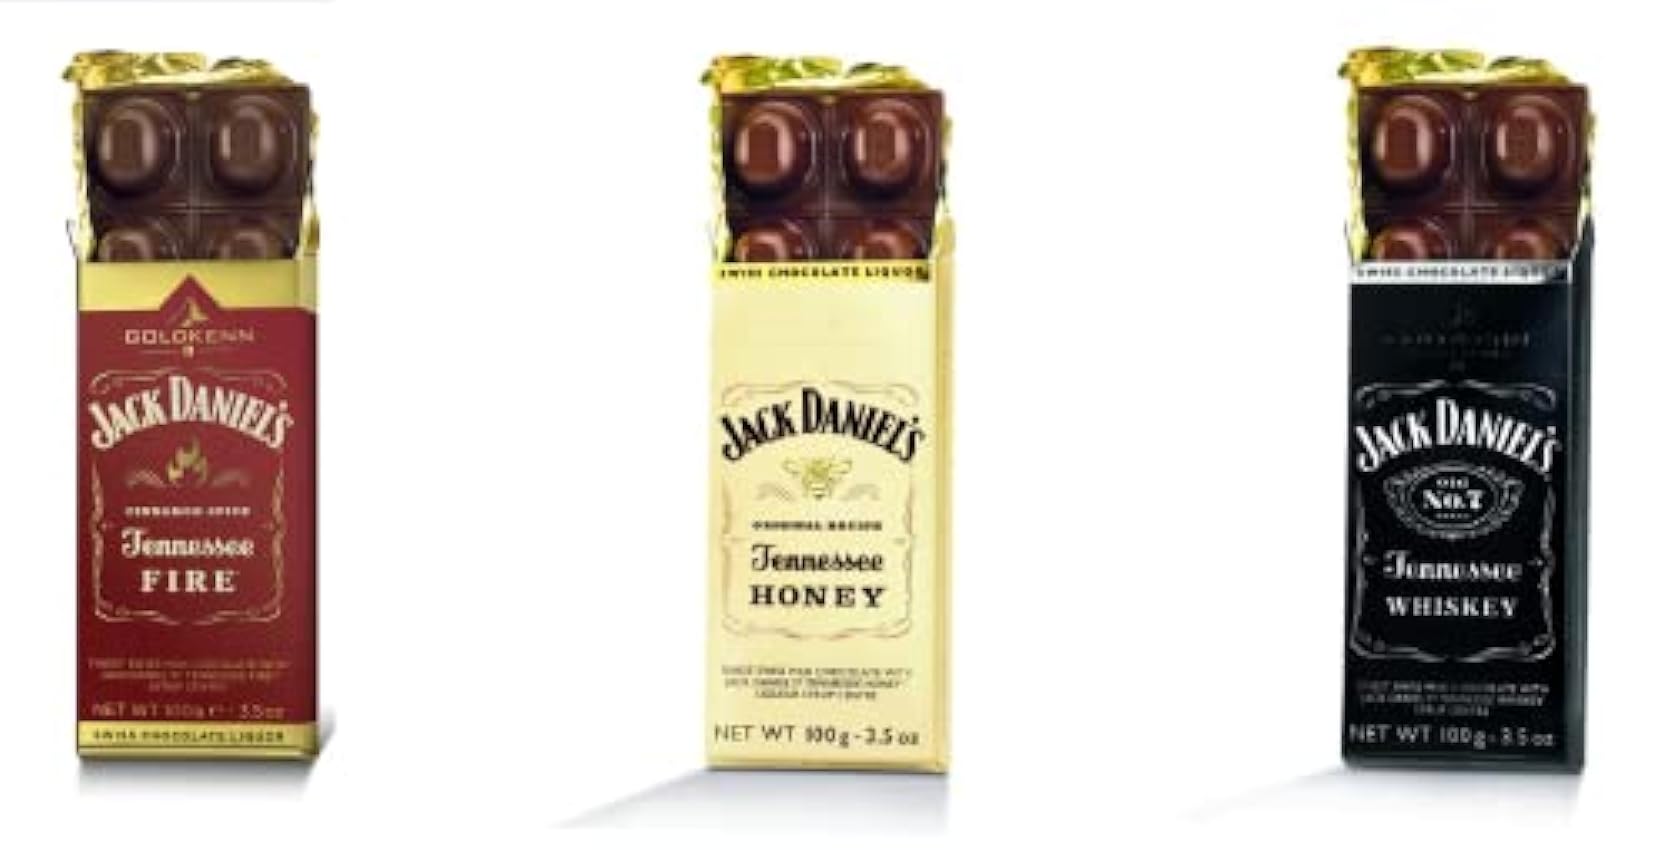 großen Rabatt 3 x Jack Daniels Schweizer Whisky Schokol